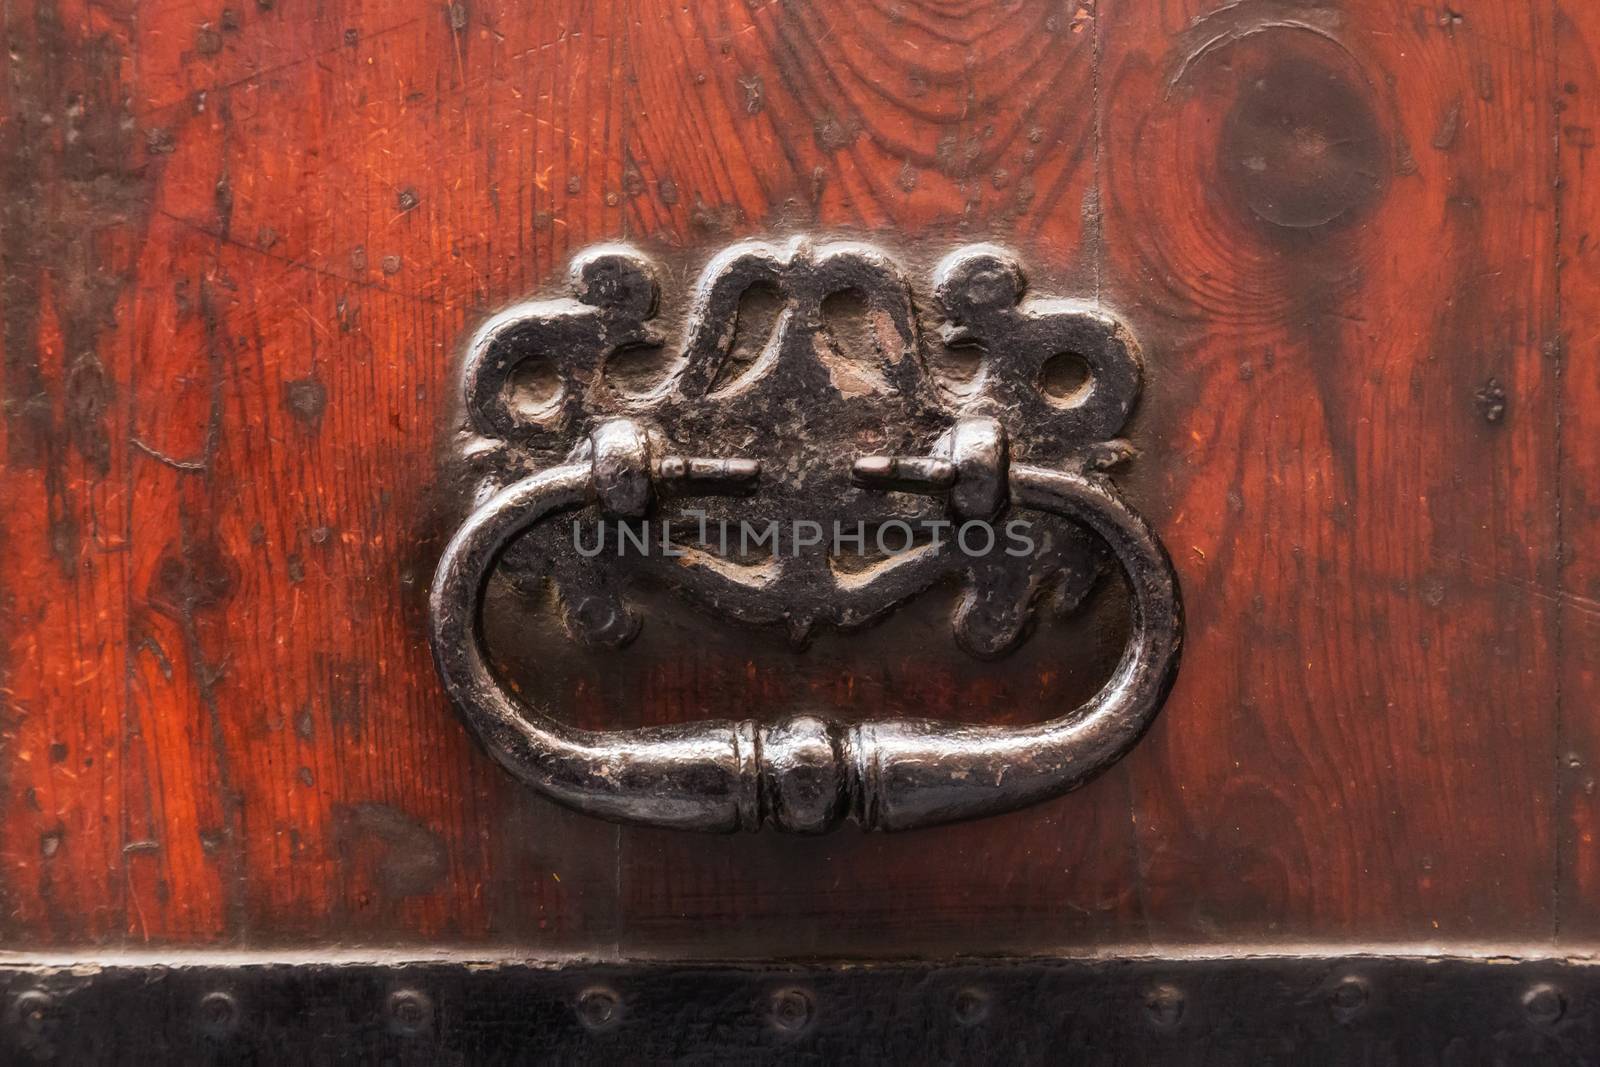 A door knocker made of brass on a wooden door